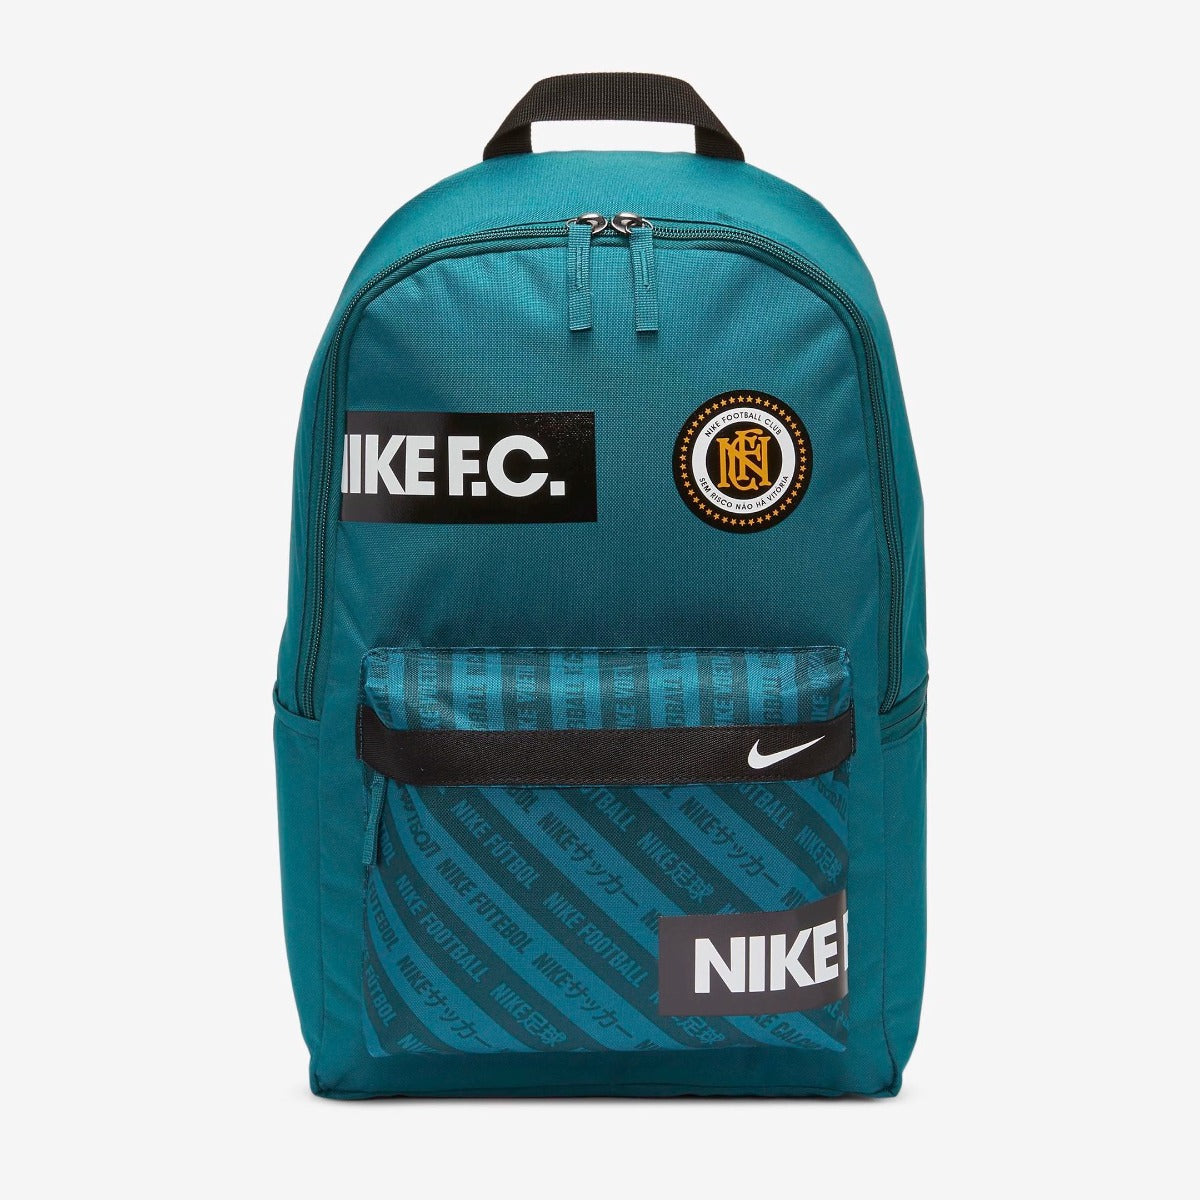 Nike FC Soccer Backpack - Teal-Black